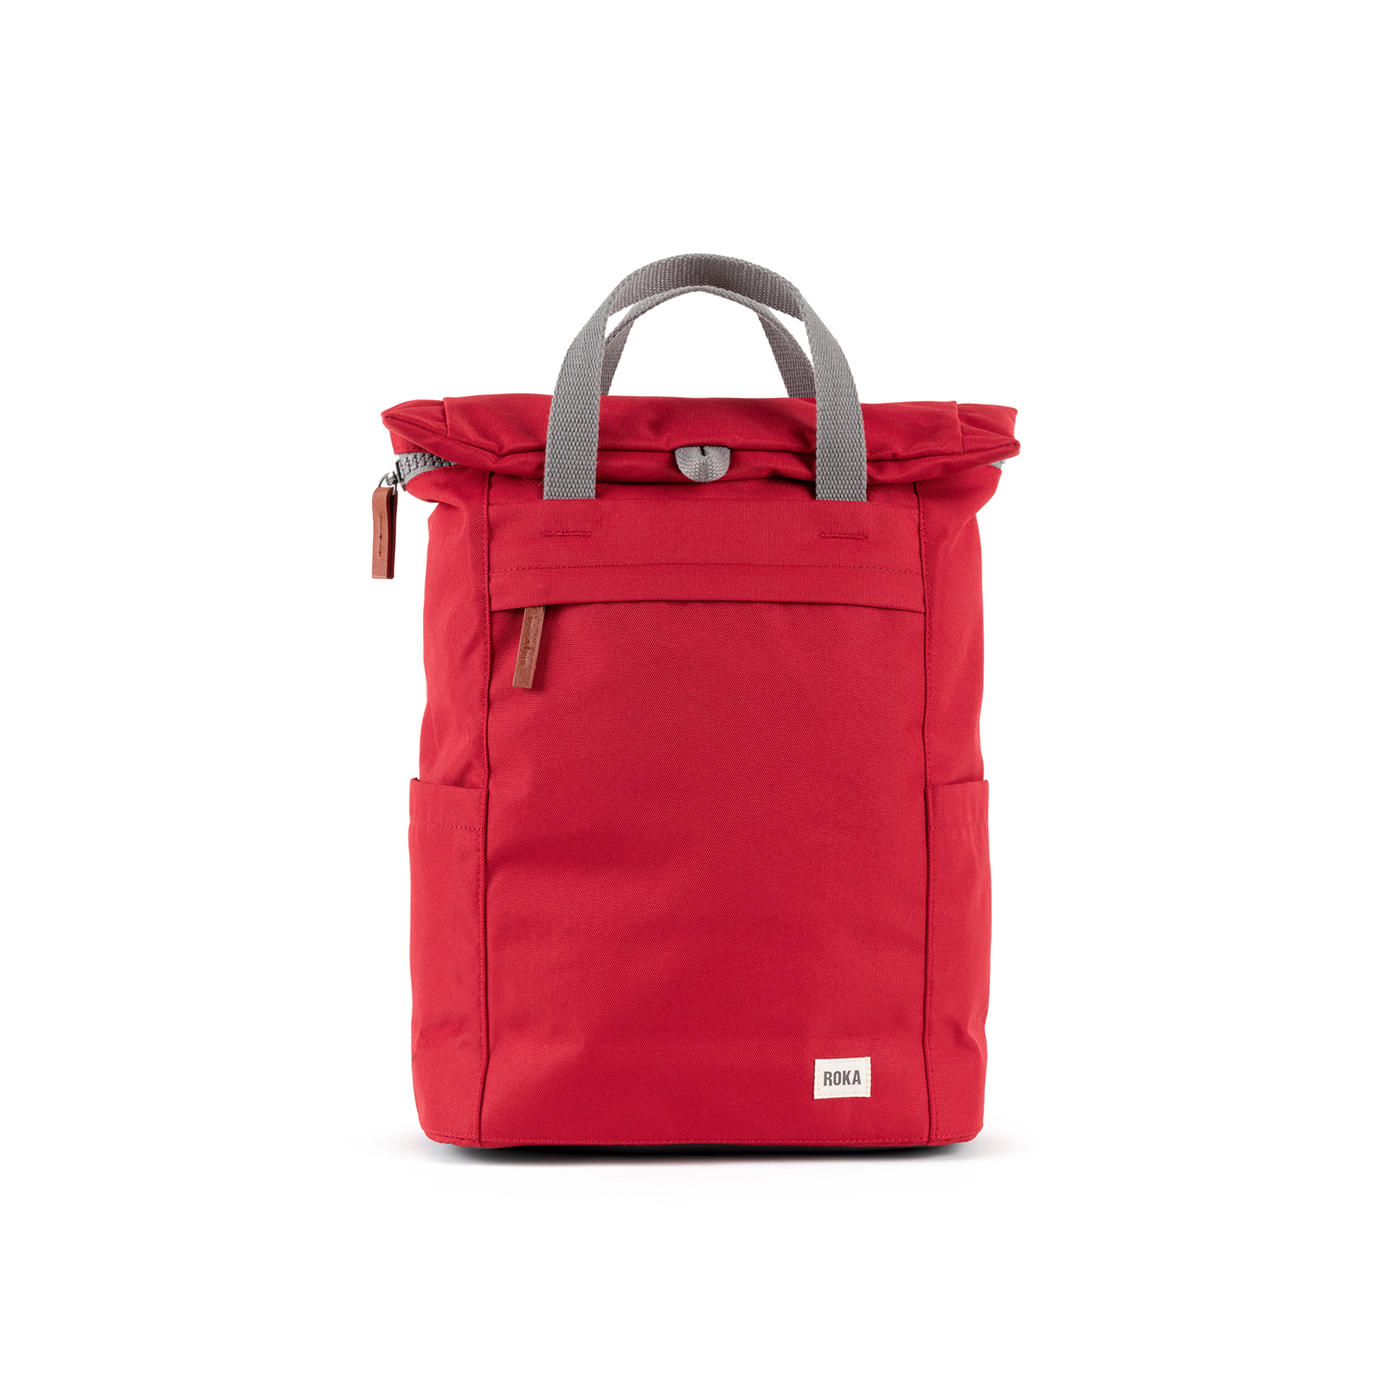 Roka Finchley Medium Backpack - Red